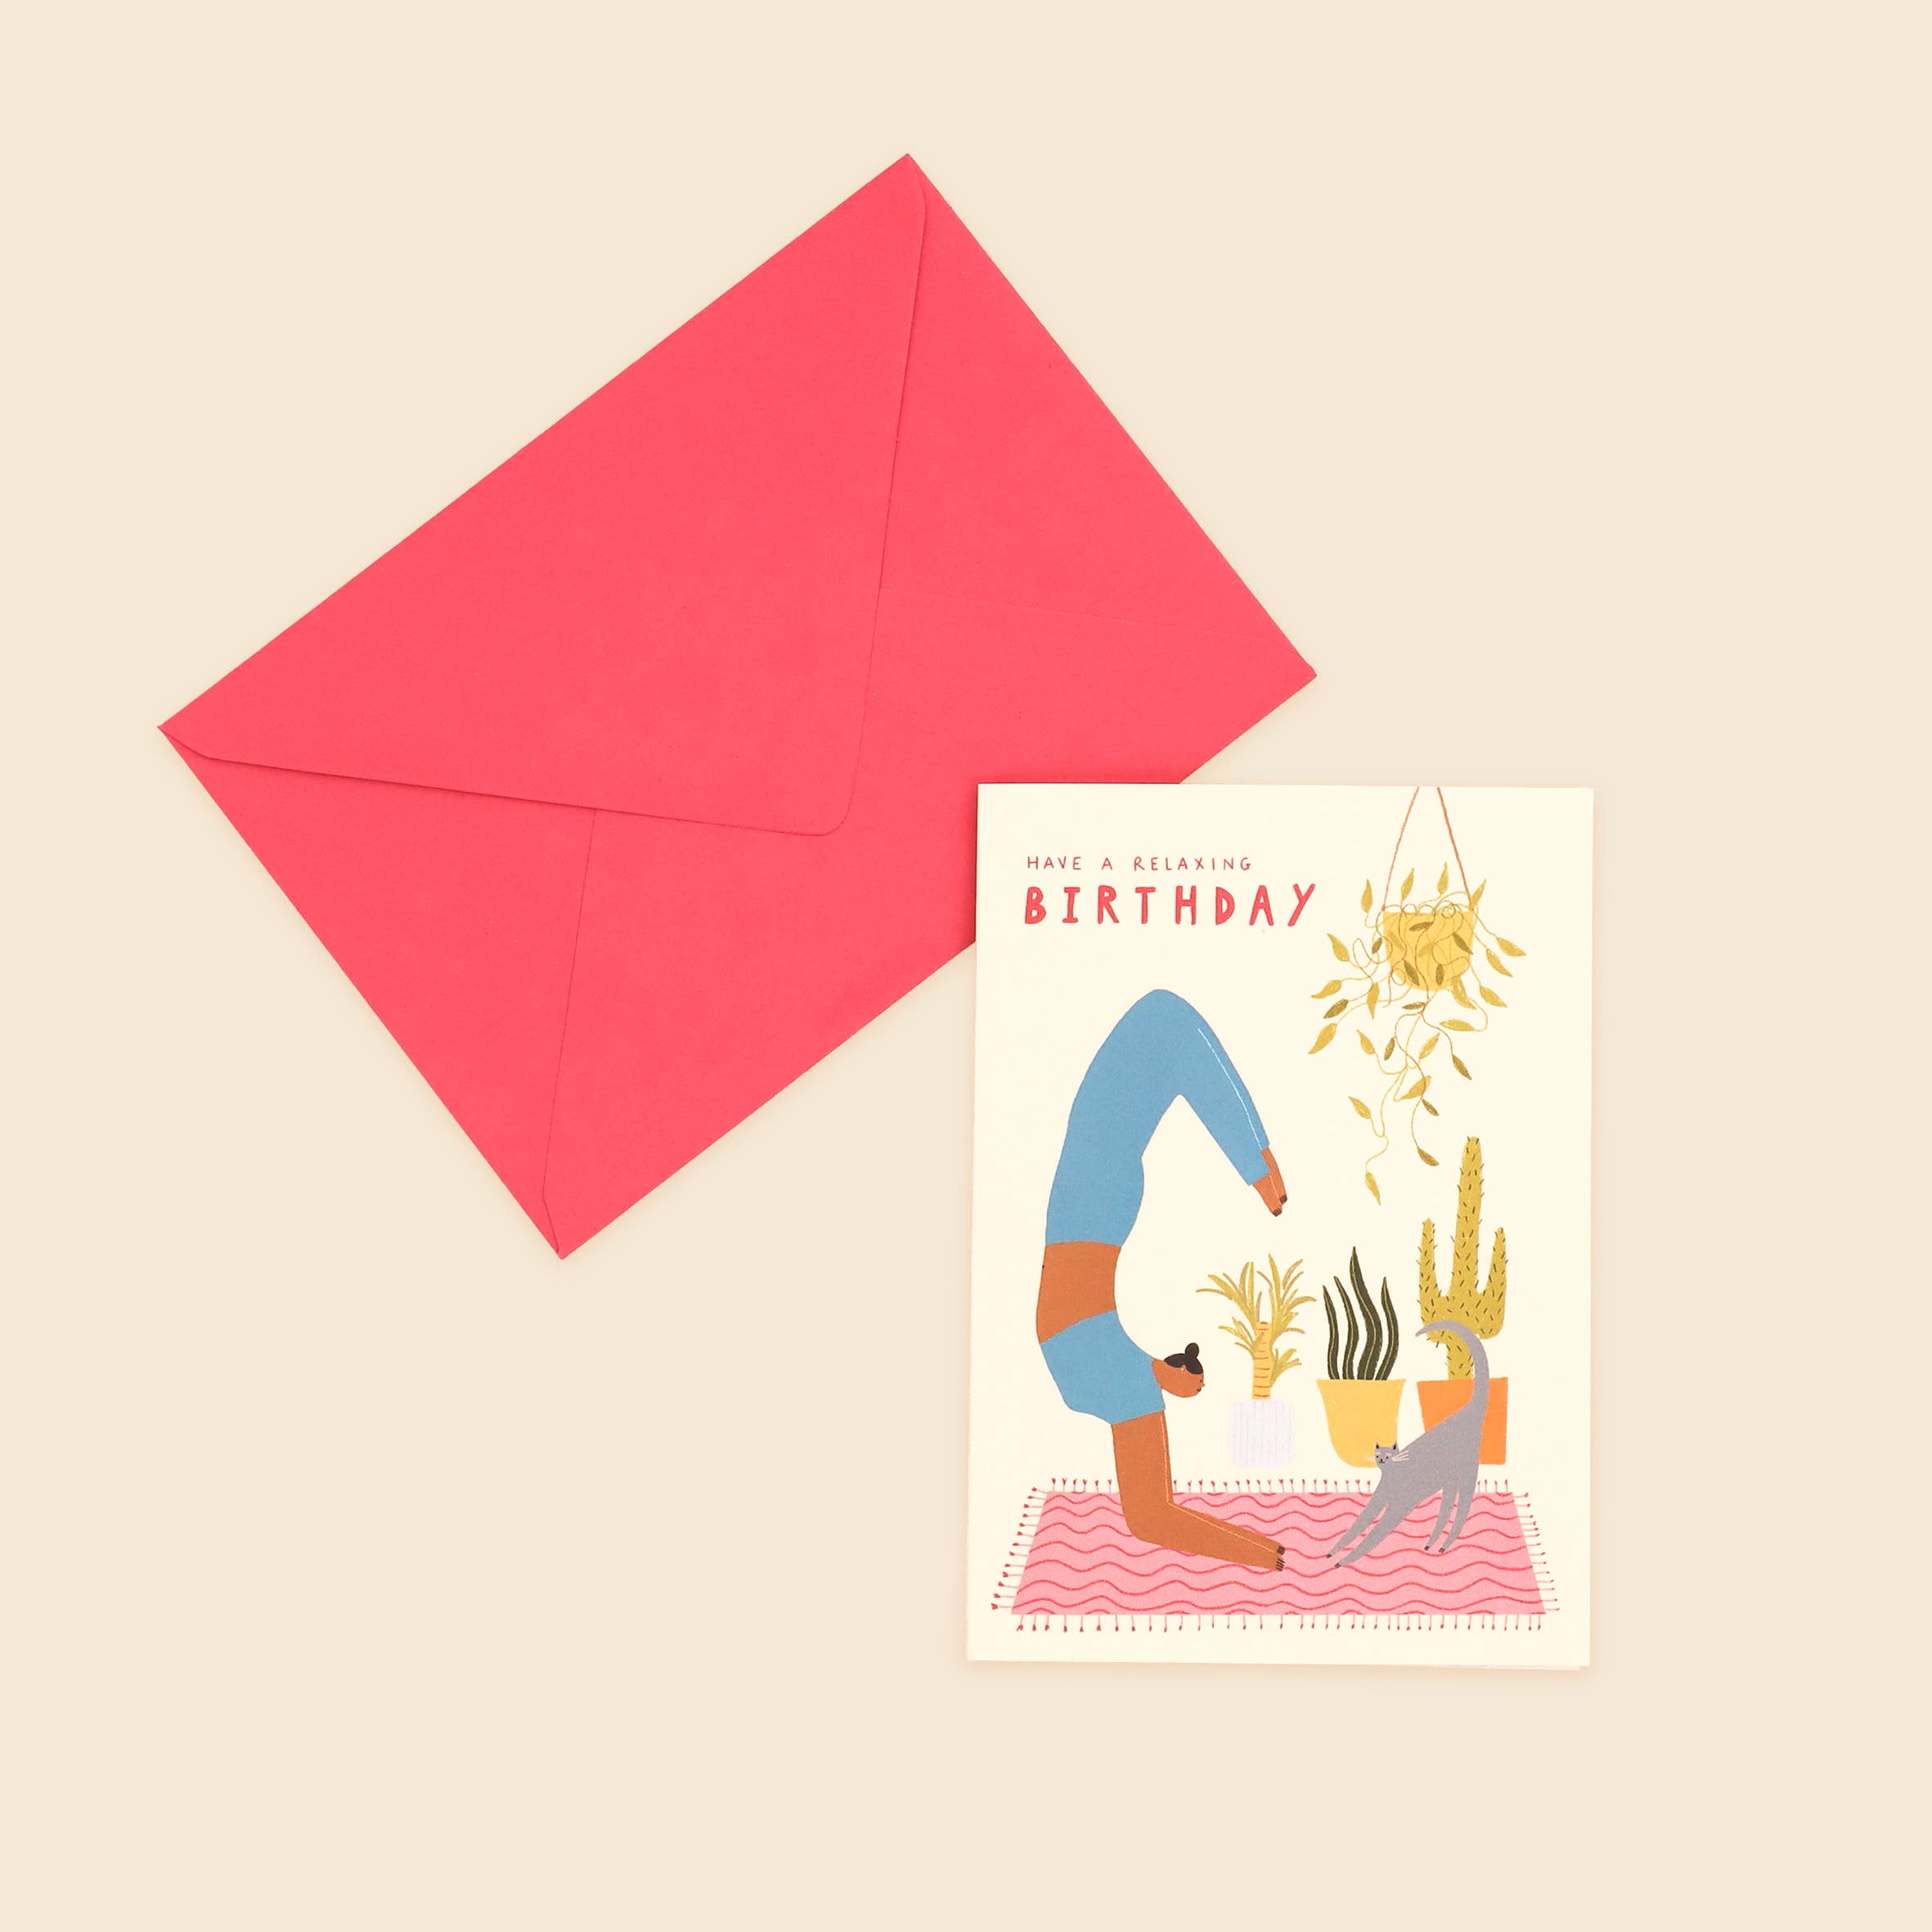 Yoga Birthday Card | Relaxing Birthday | Mindfulness Card